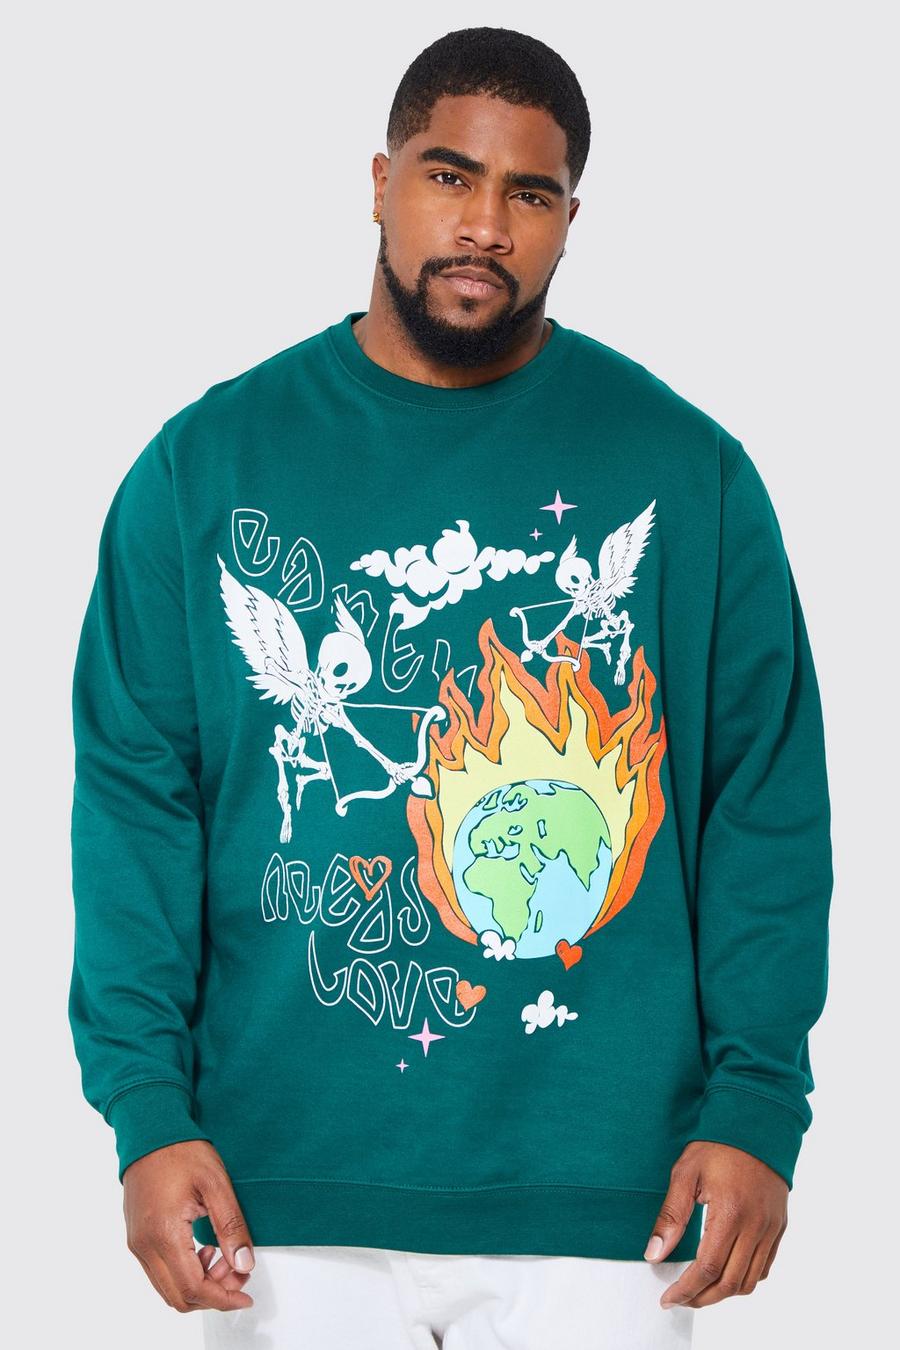 Plus Planet Needs Love Sweatshirt, Forest verde